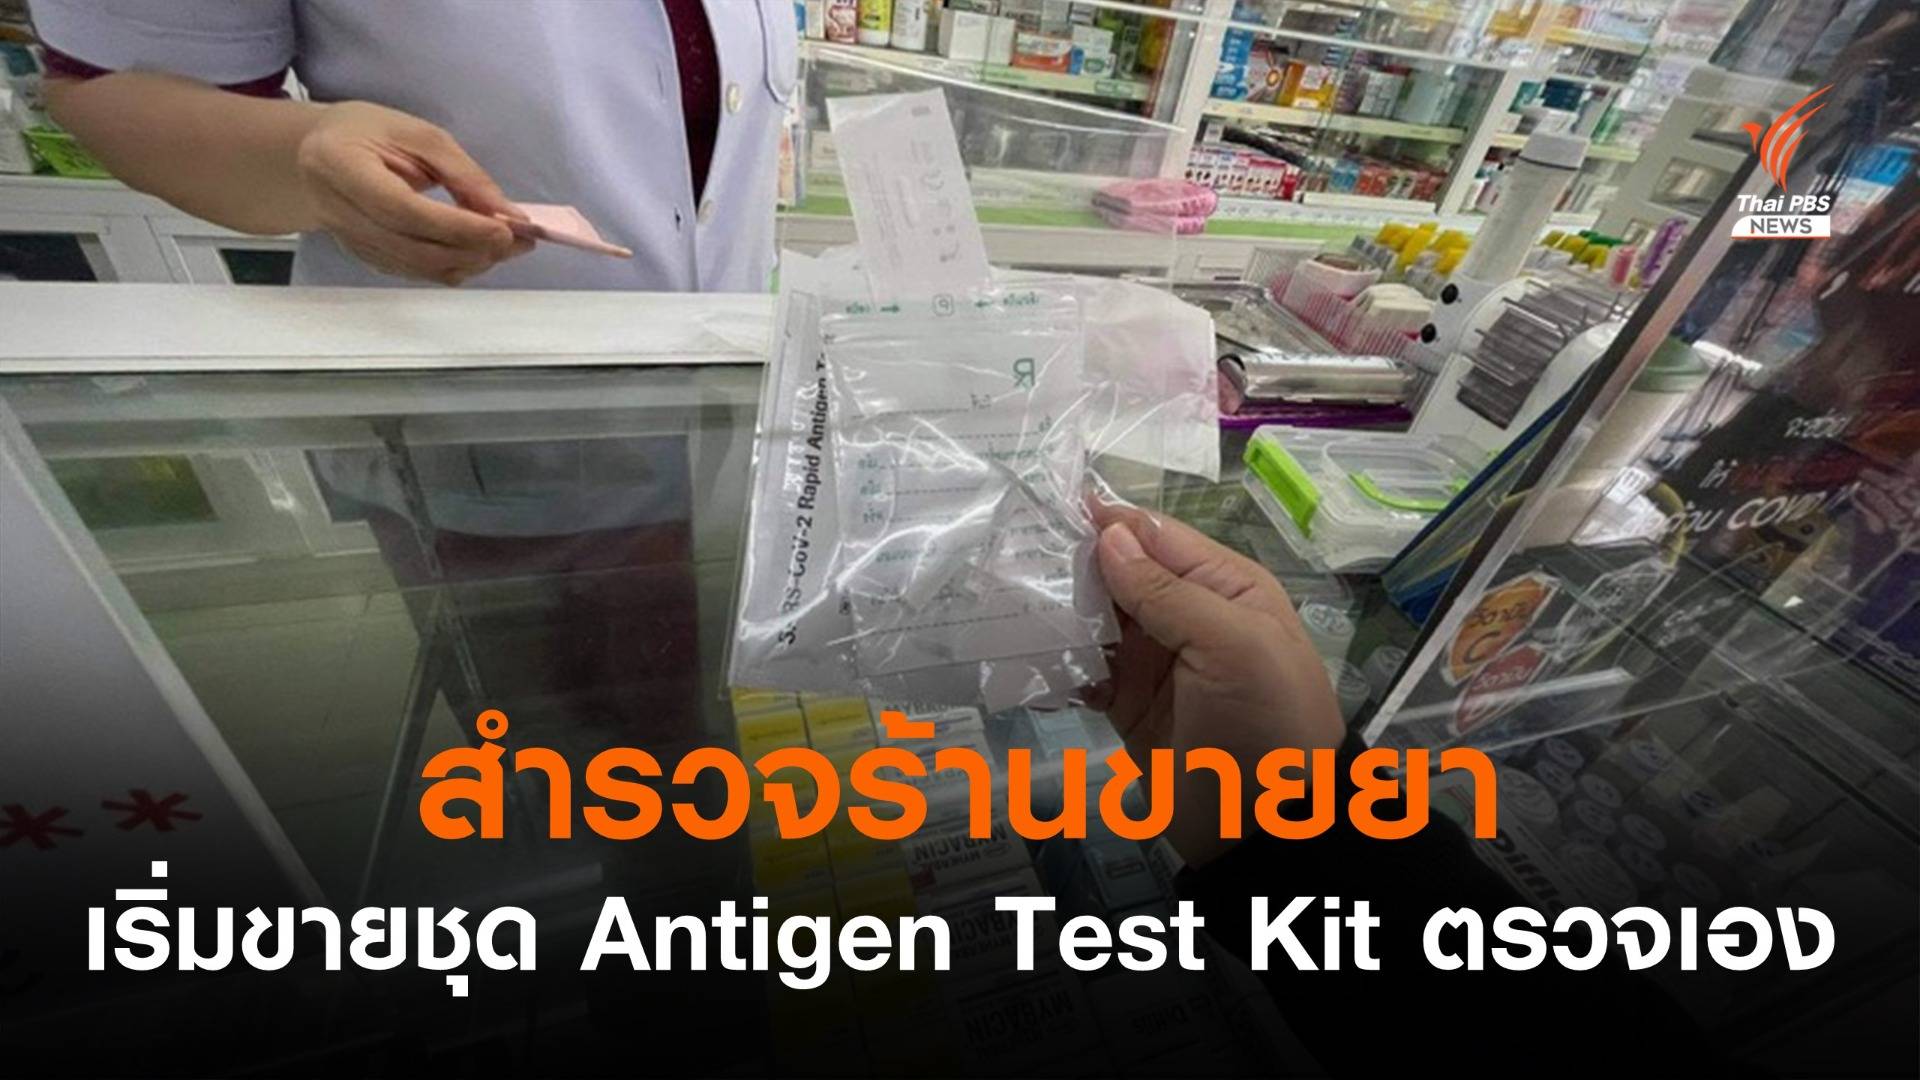 Antigen Test Kit ขายวันเดียวหมดกล่อง ร้านยารอสินค้าได้ปลายเดือน